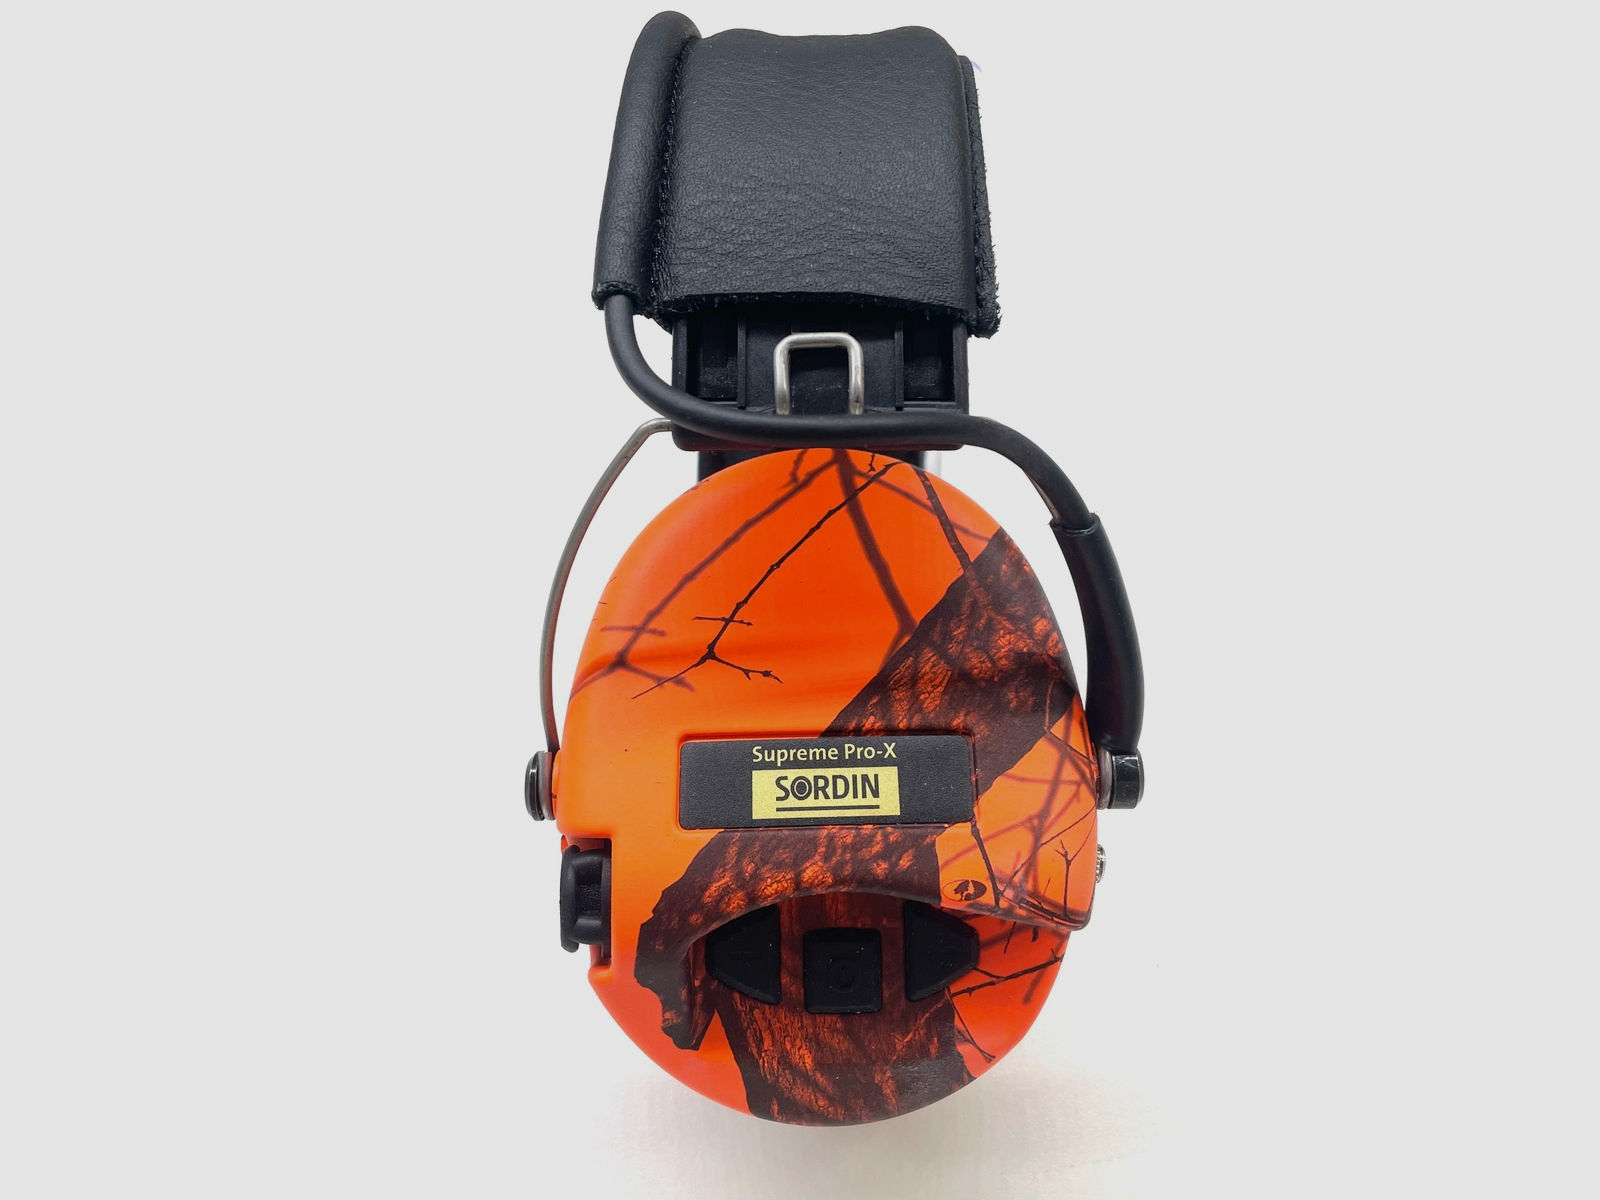 Ladenaussteller Sordin 75302-X-09-S Elektronischer Gehörschutz Supreme Orange Pro X LED Headband V22